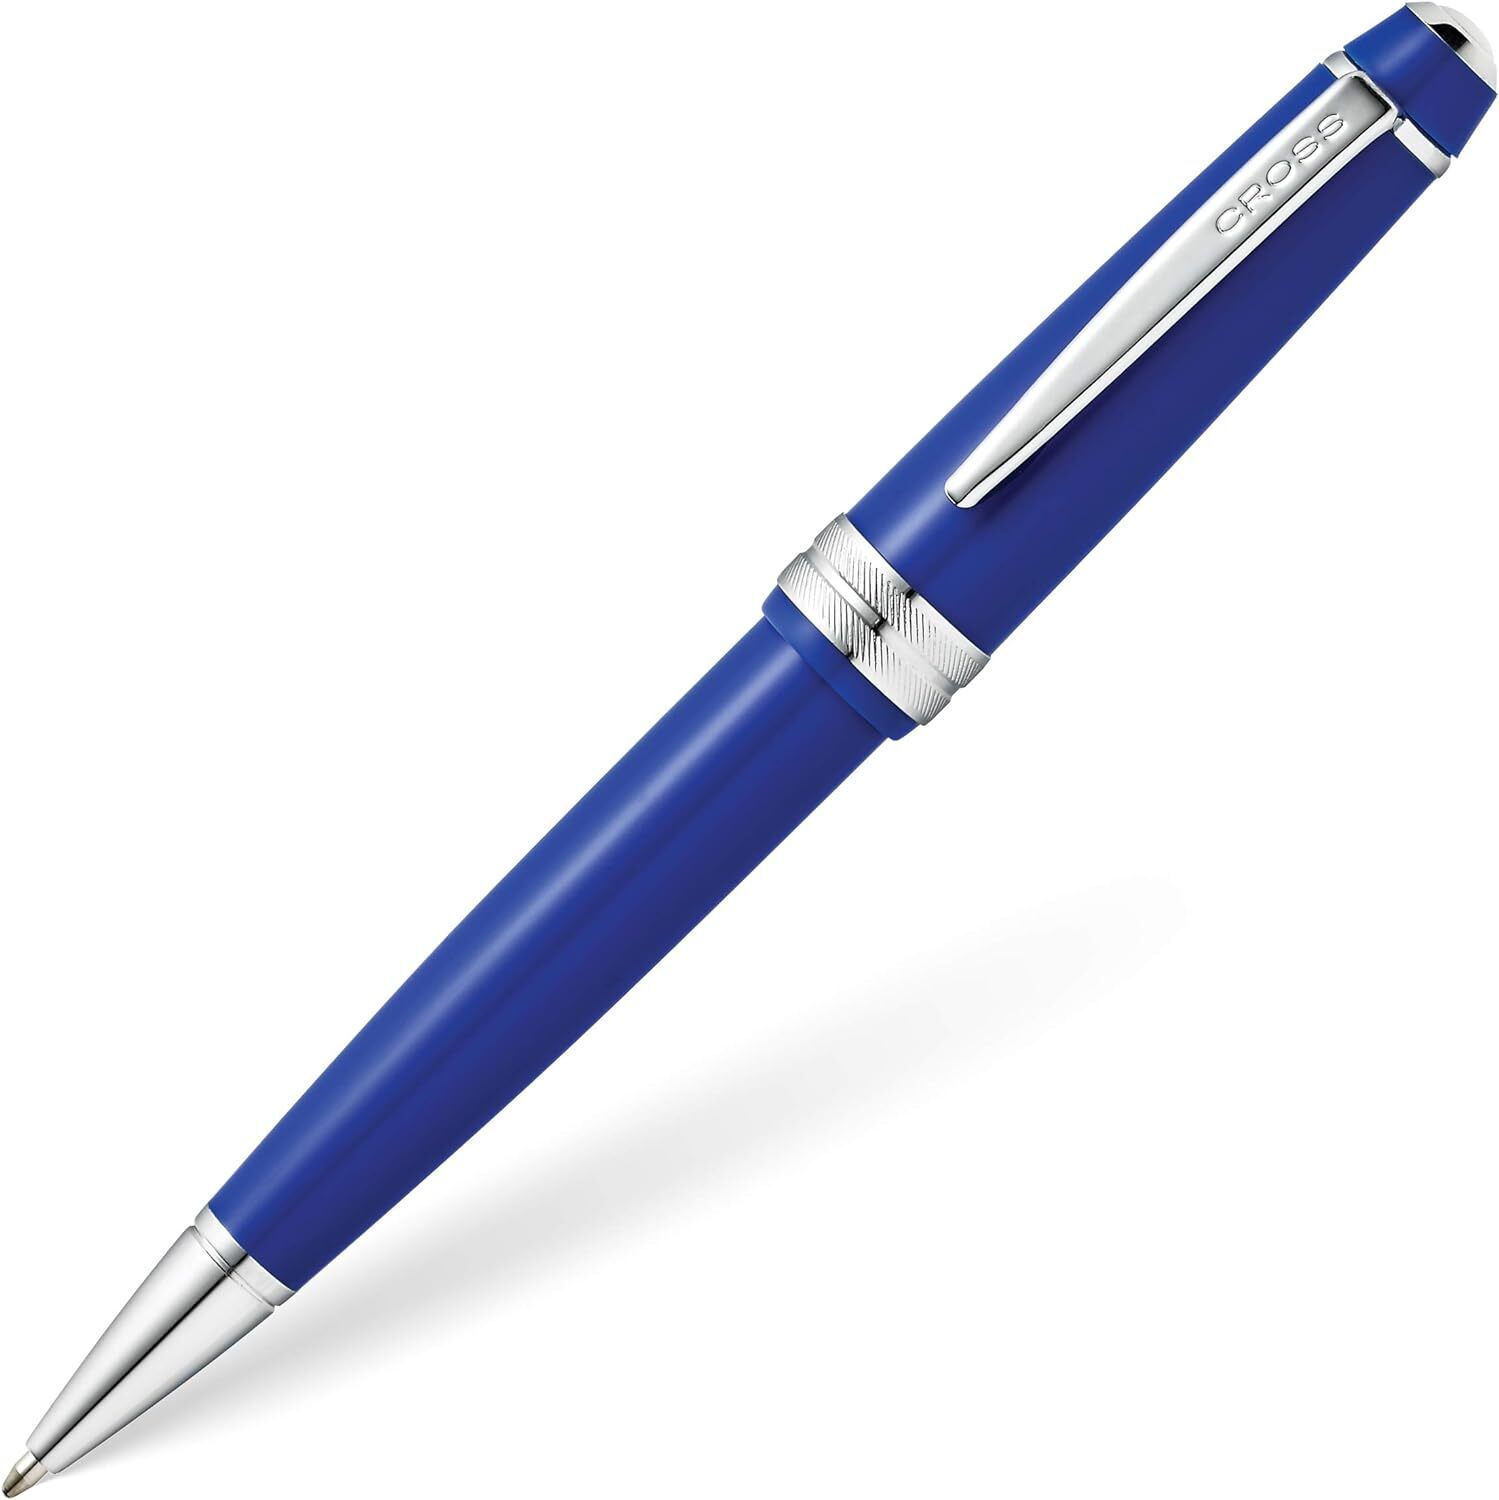 Cross Bailey Light Ballpoint Pen, Polished Blue & Chrome, New In Box